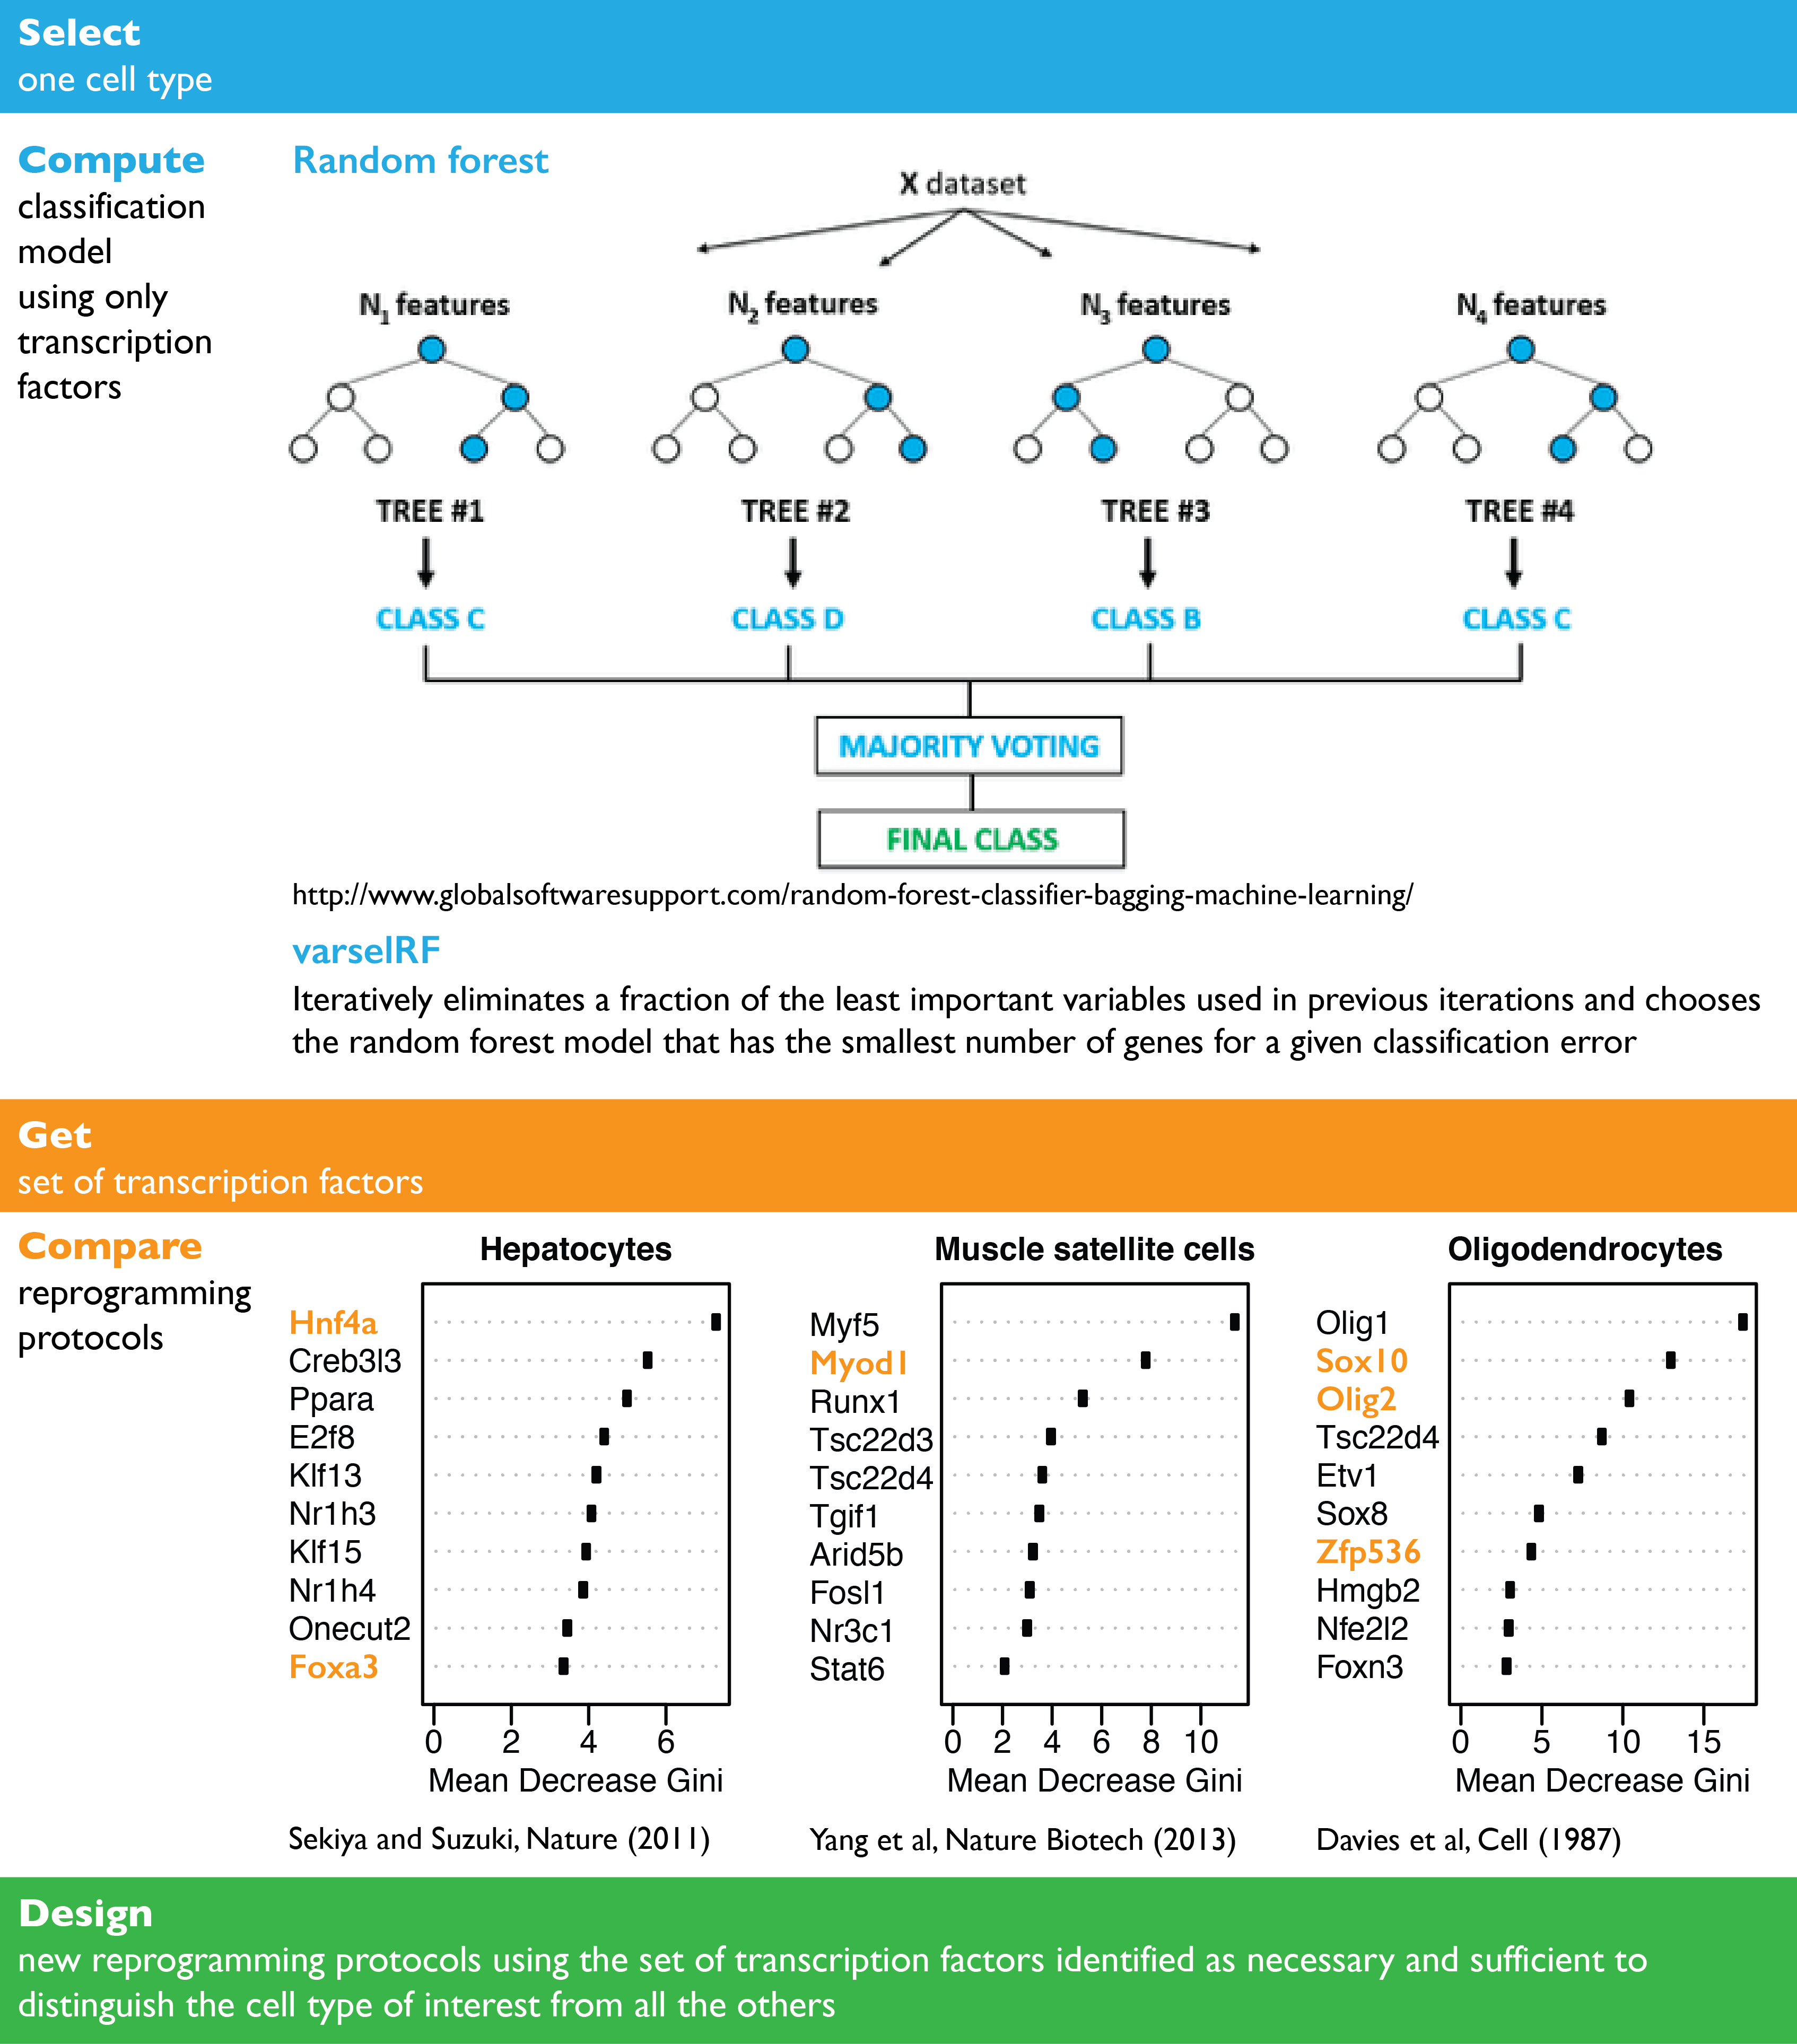 Random forest model using transcription factors